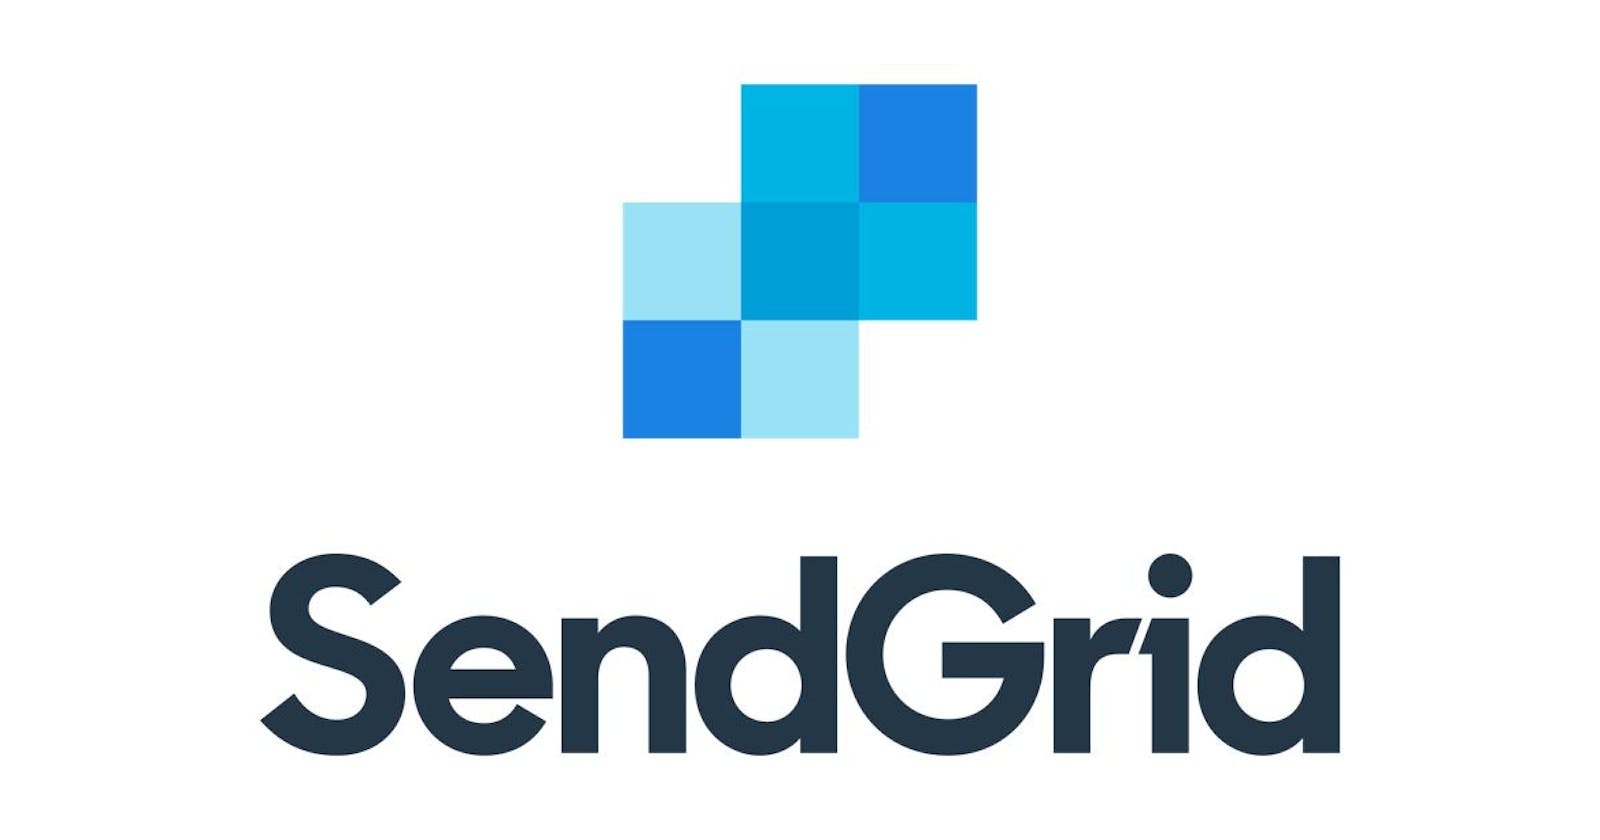 How to send emails in NodeJS using SendGrid